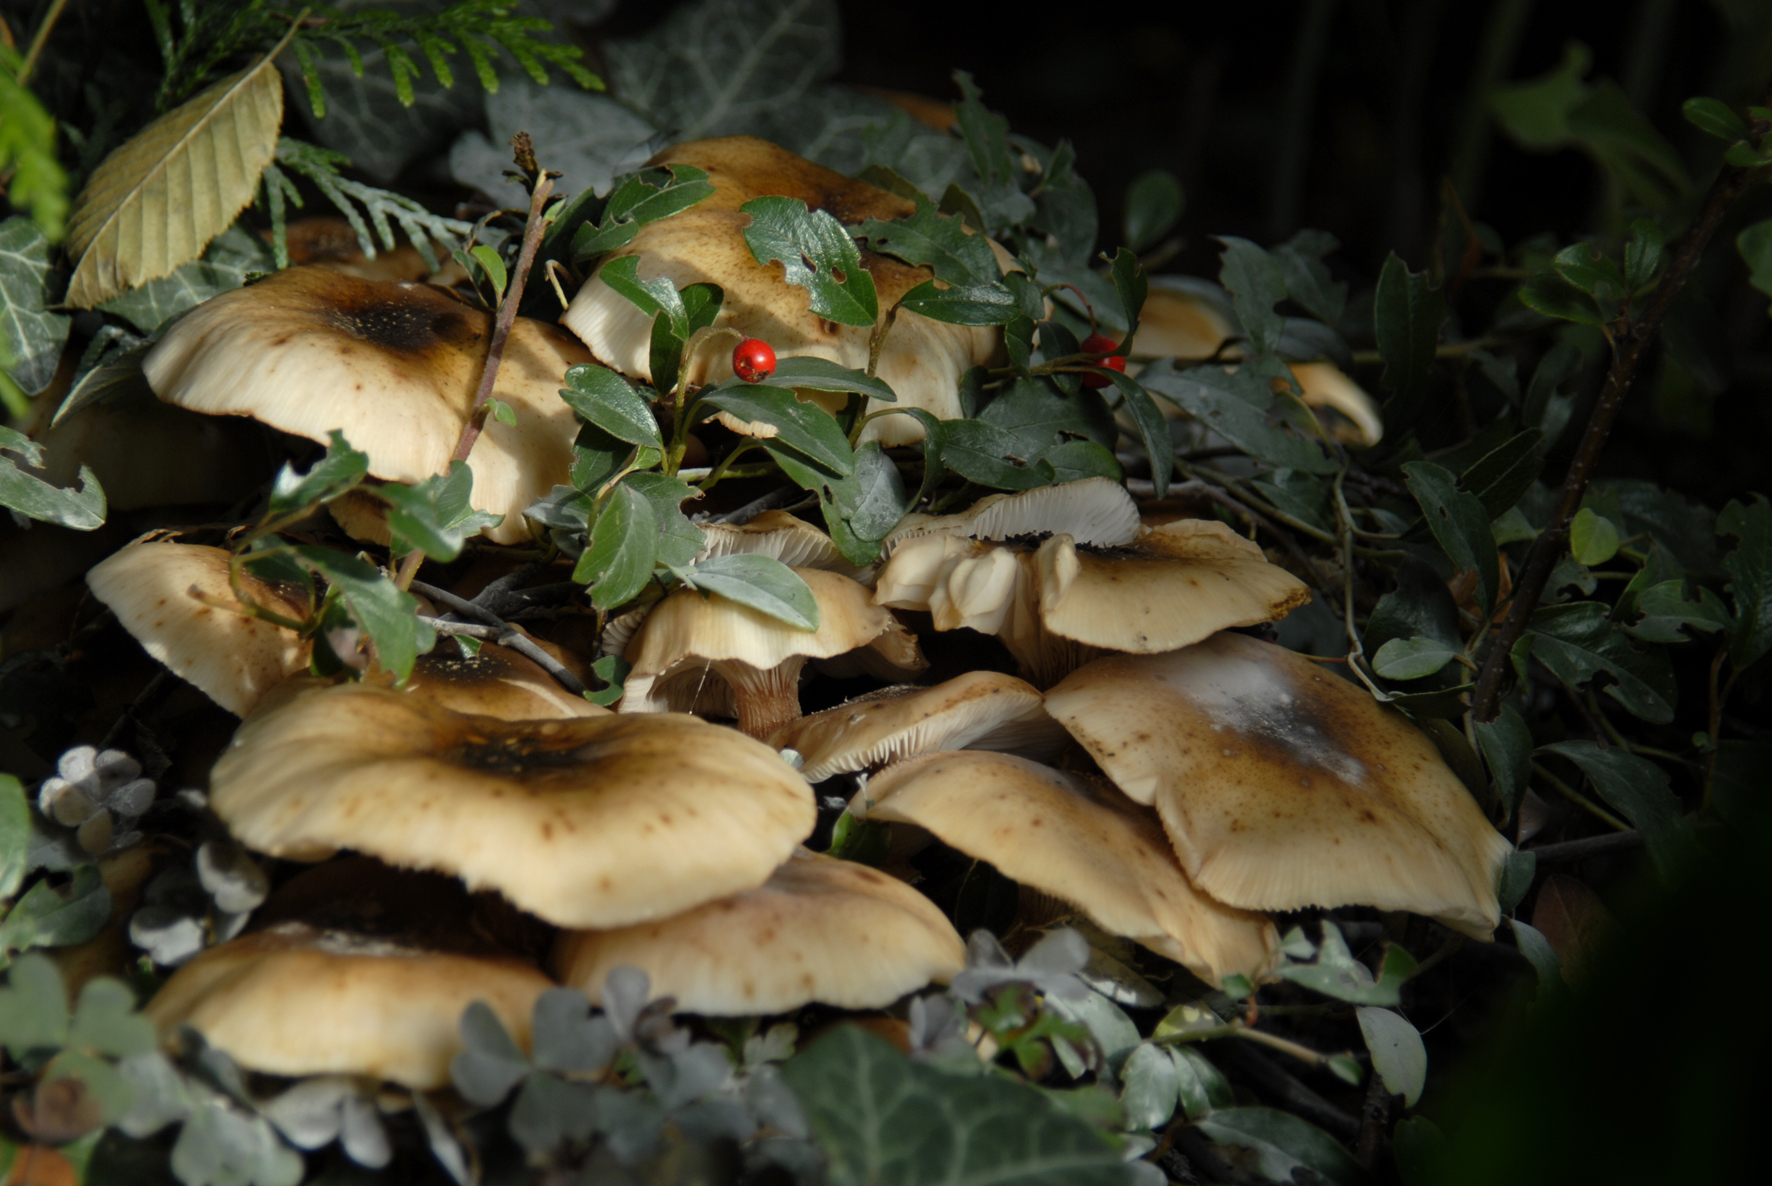 File:Wild mushrooms.jpg - Wikimedia Commons